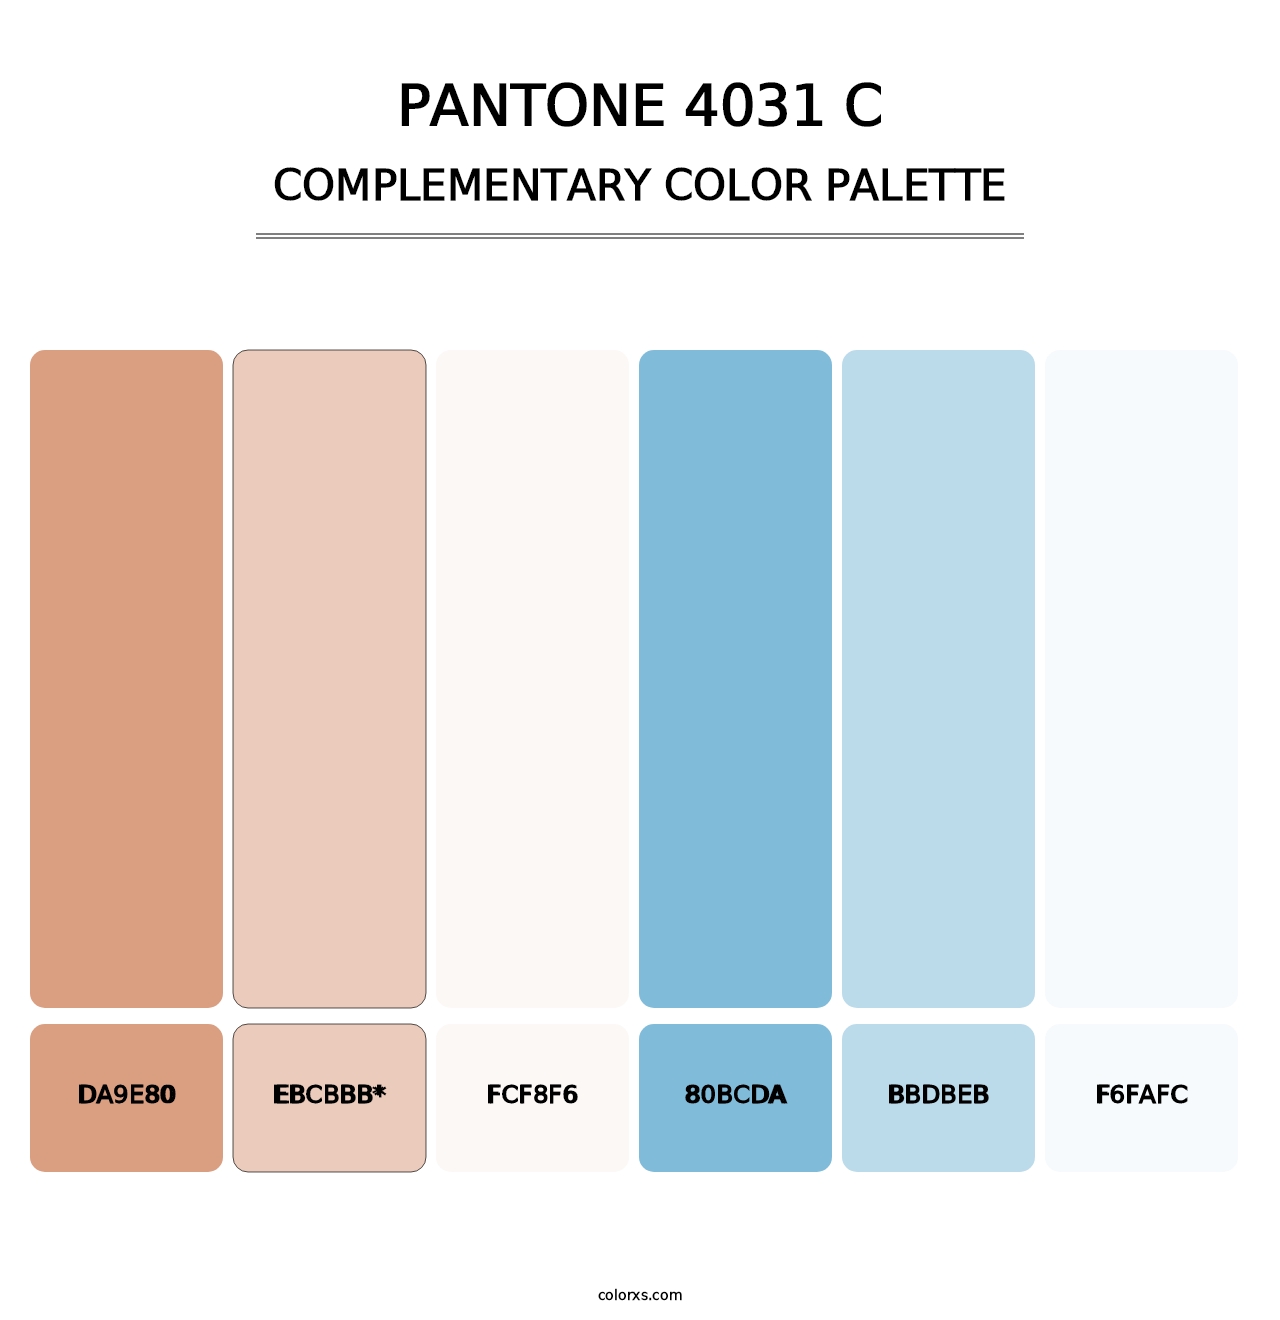 PANTONE 4031 C - Complementary Color Palette